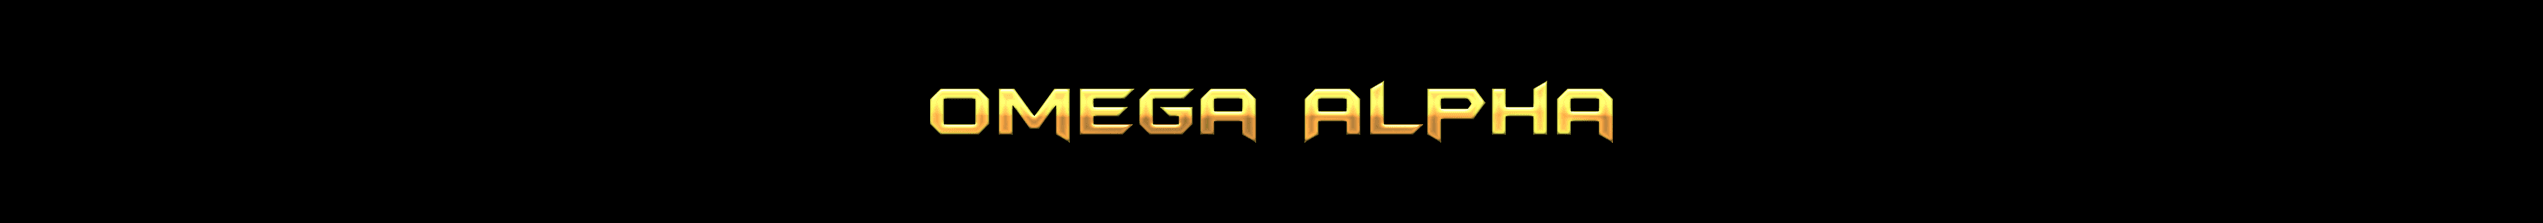 Omega-Alpha-Project-Wallet 배너